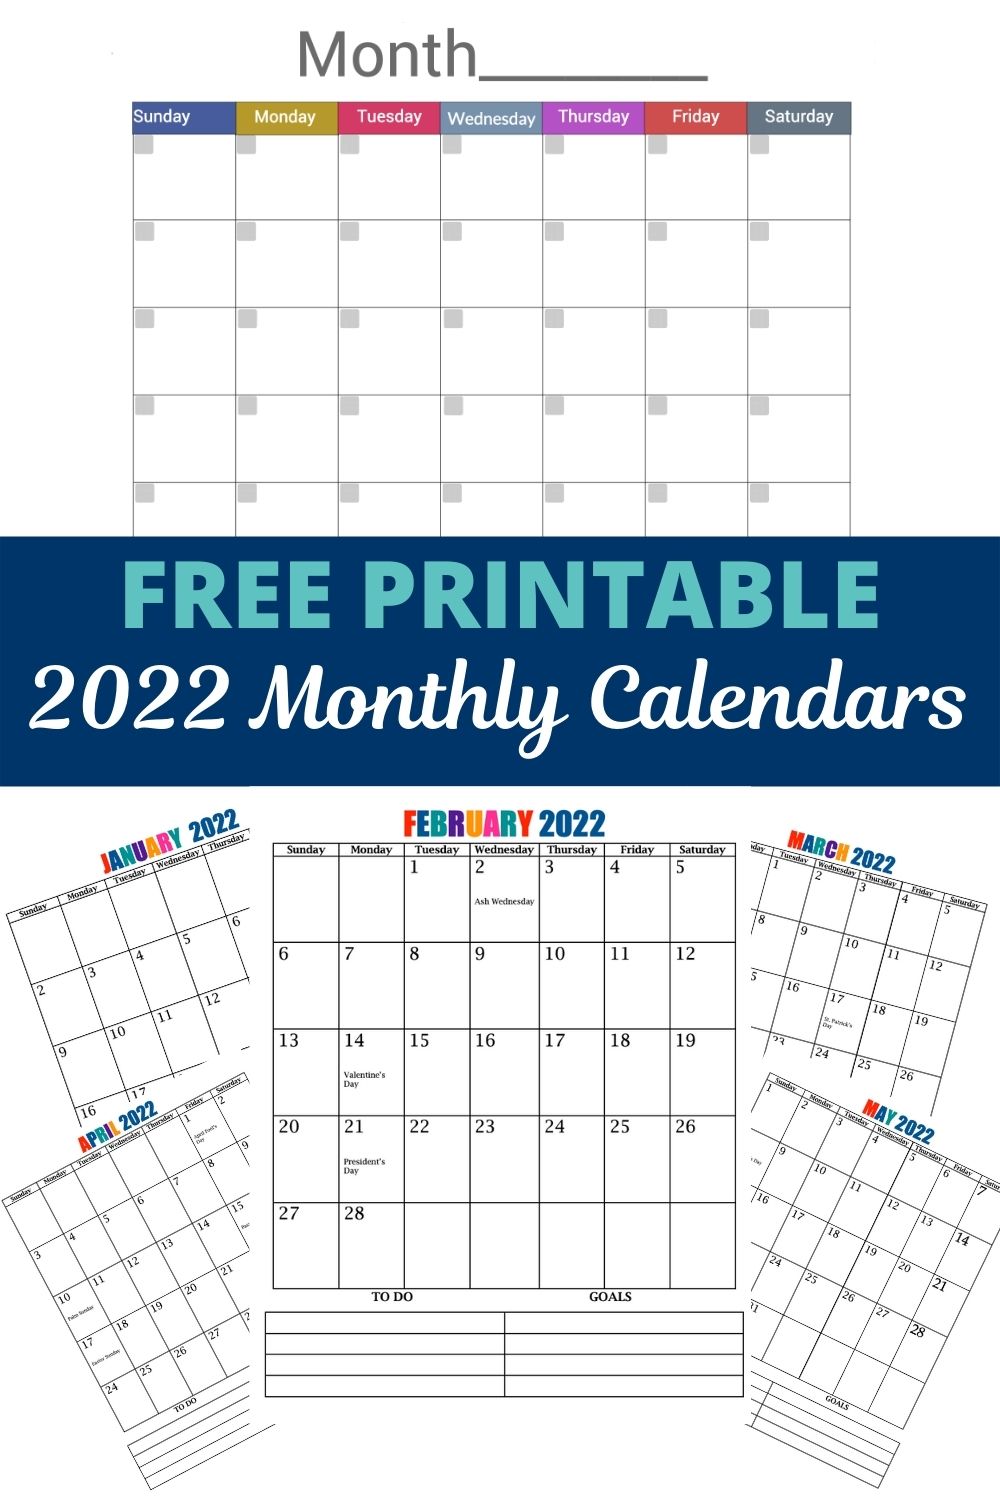 FREE monthly calendars pinterest